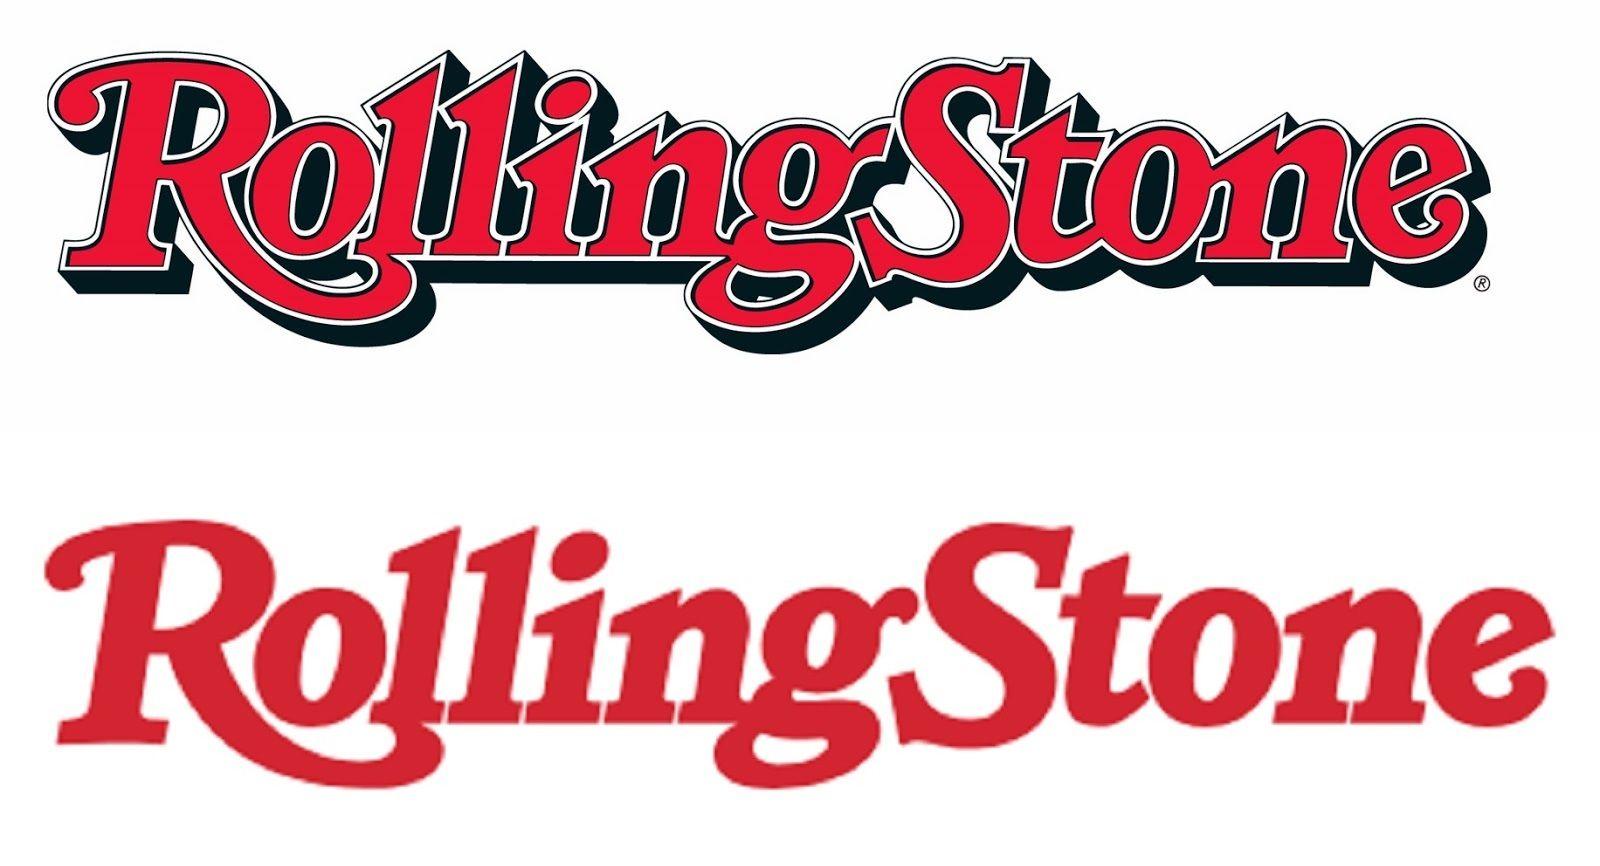 Rolling stone купить. Rolling Stones логотип. Группа the Rolling Stones logo. Логотип рок группы Роллинг Стоун. Rolling Stone журнал логотип.